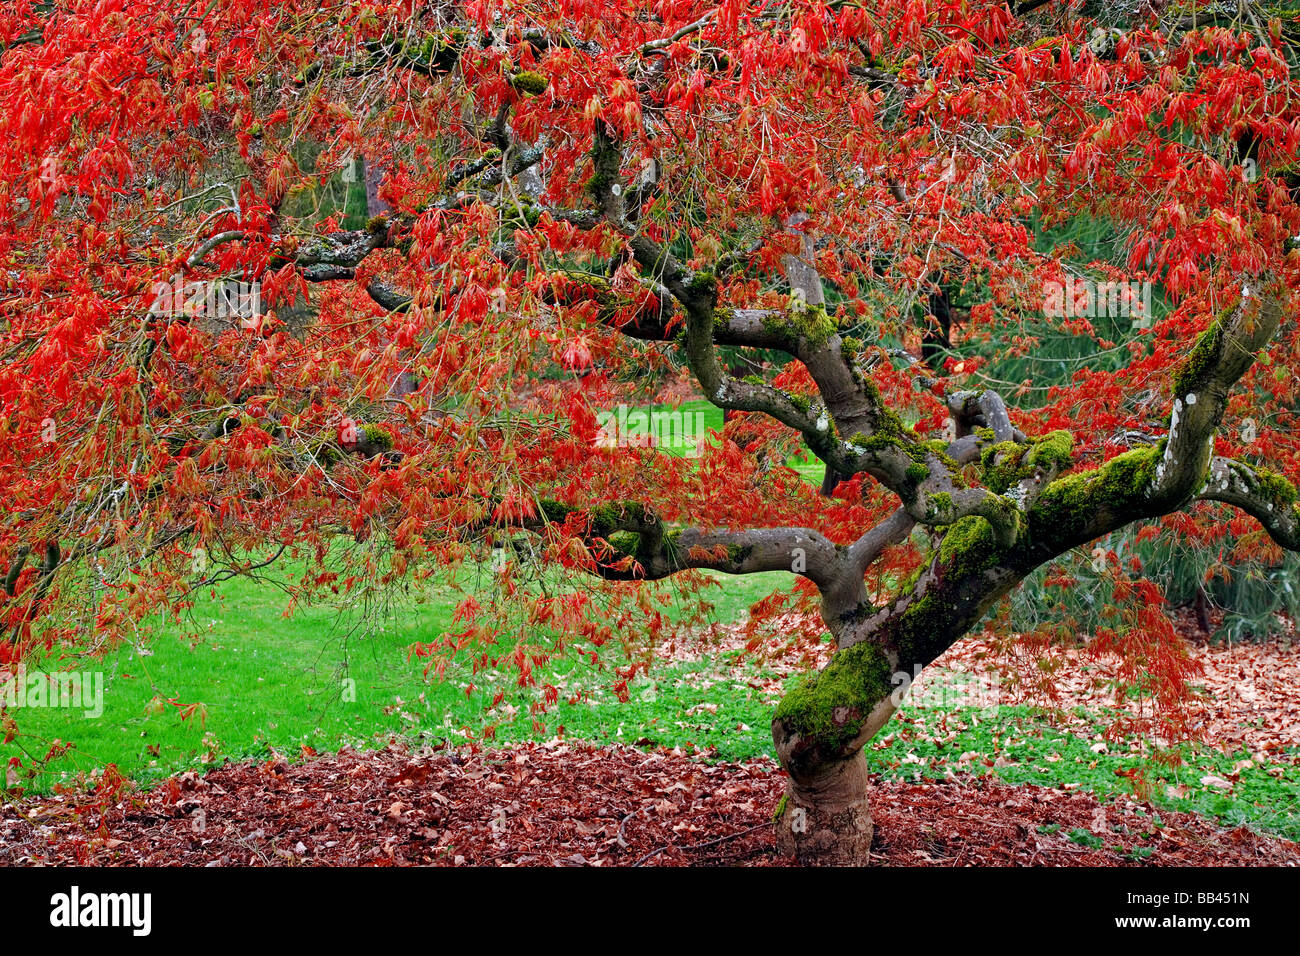 USA, Washington, Seattle. Japanischer Ahornbaum im Washington Park Arboretum. Stockfoto